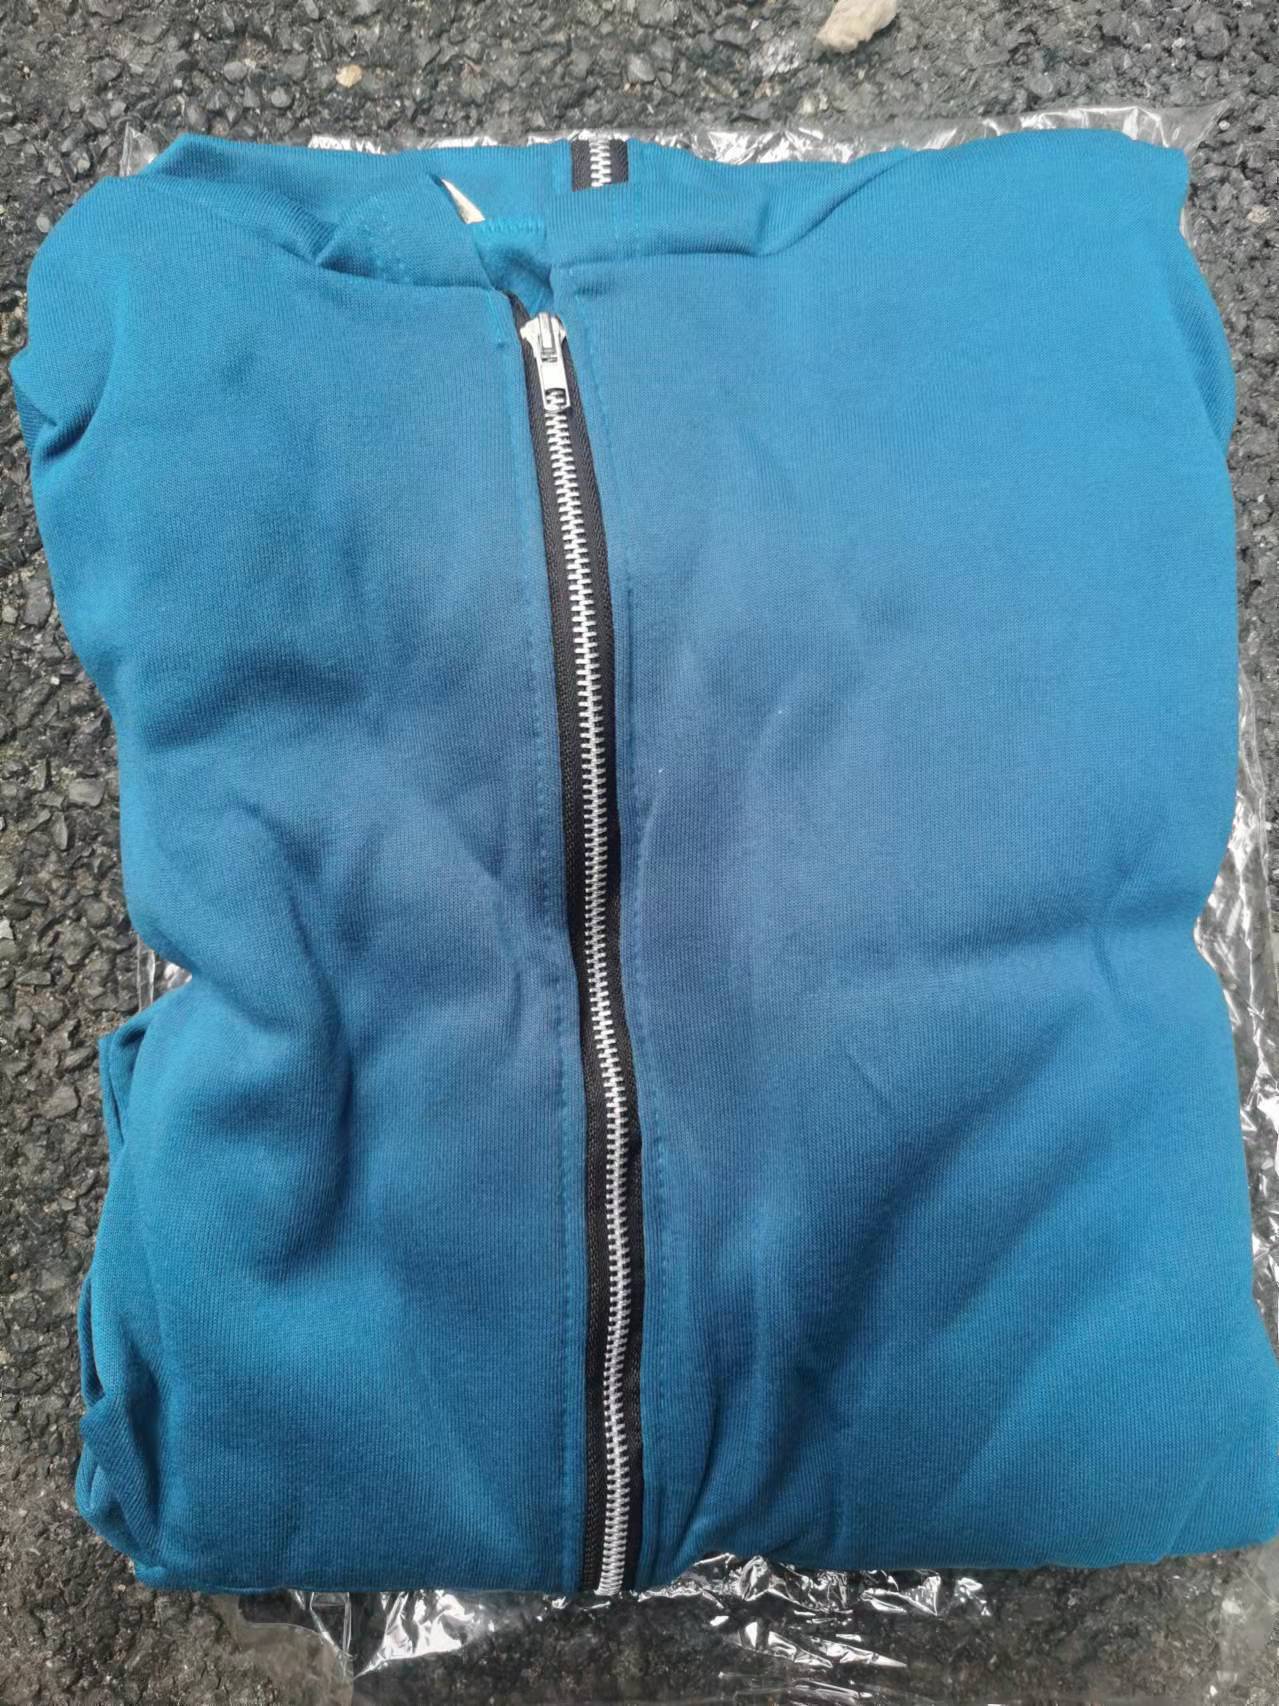 Women's Solid Color Fleece-lined Pocket Hooded Zipper Coats